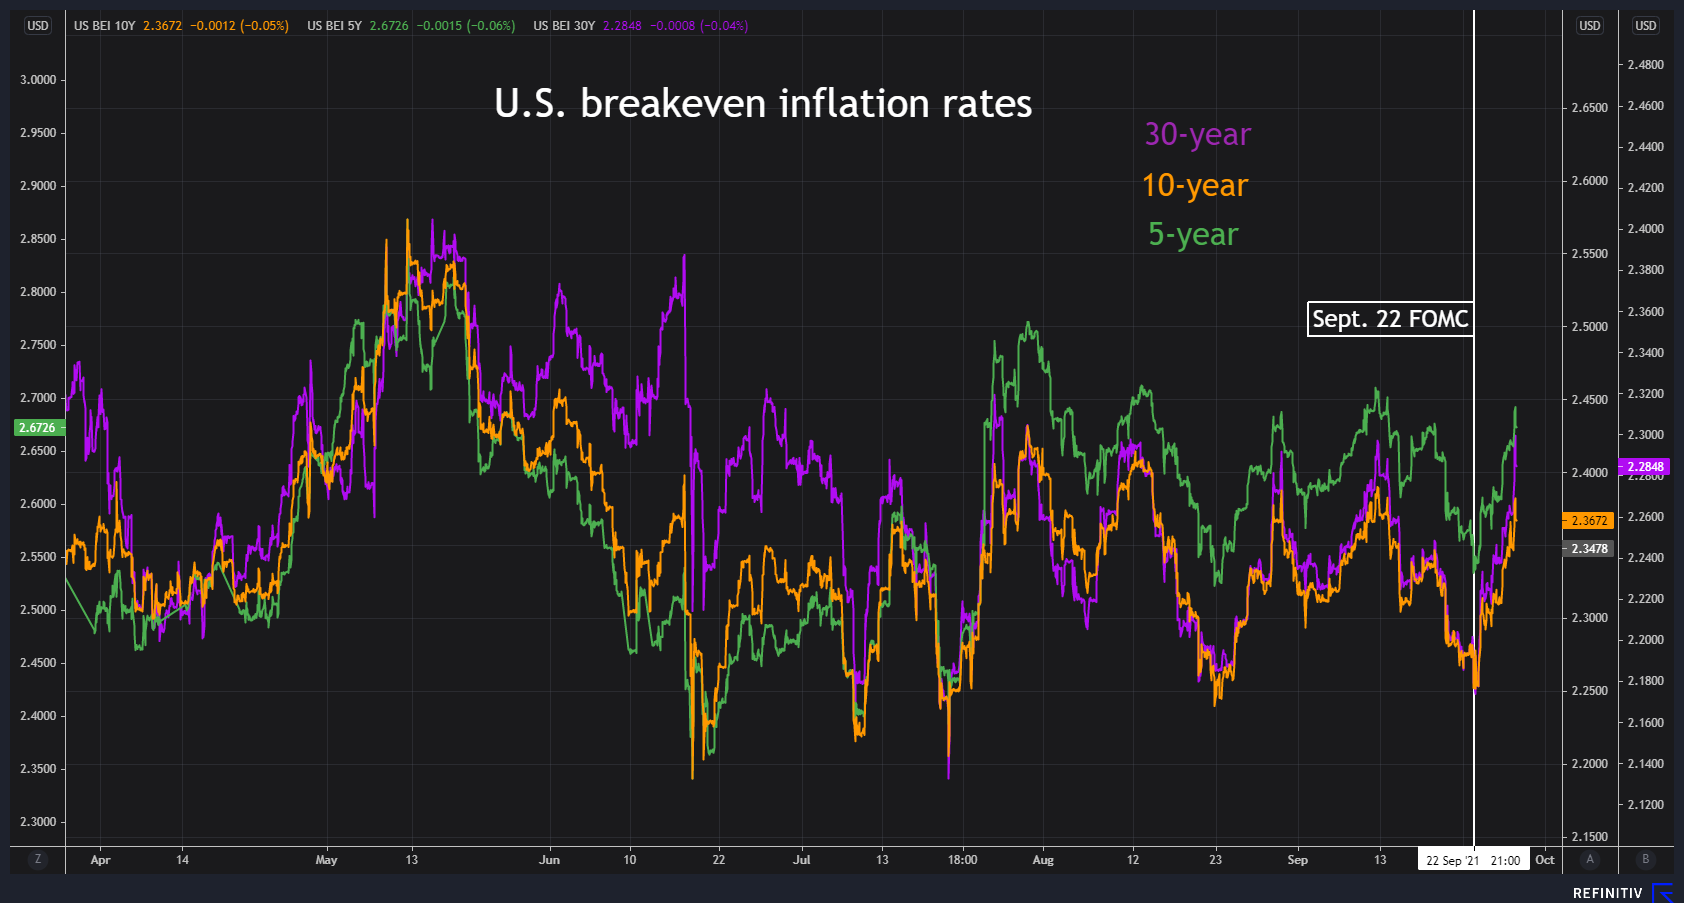 U.S. breakeven inflation rates